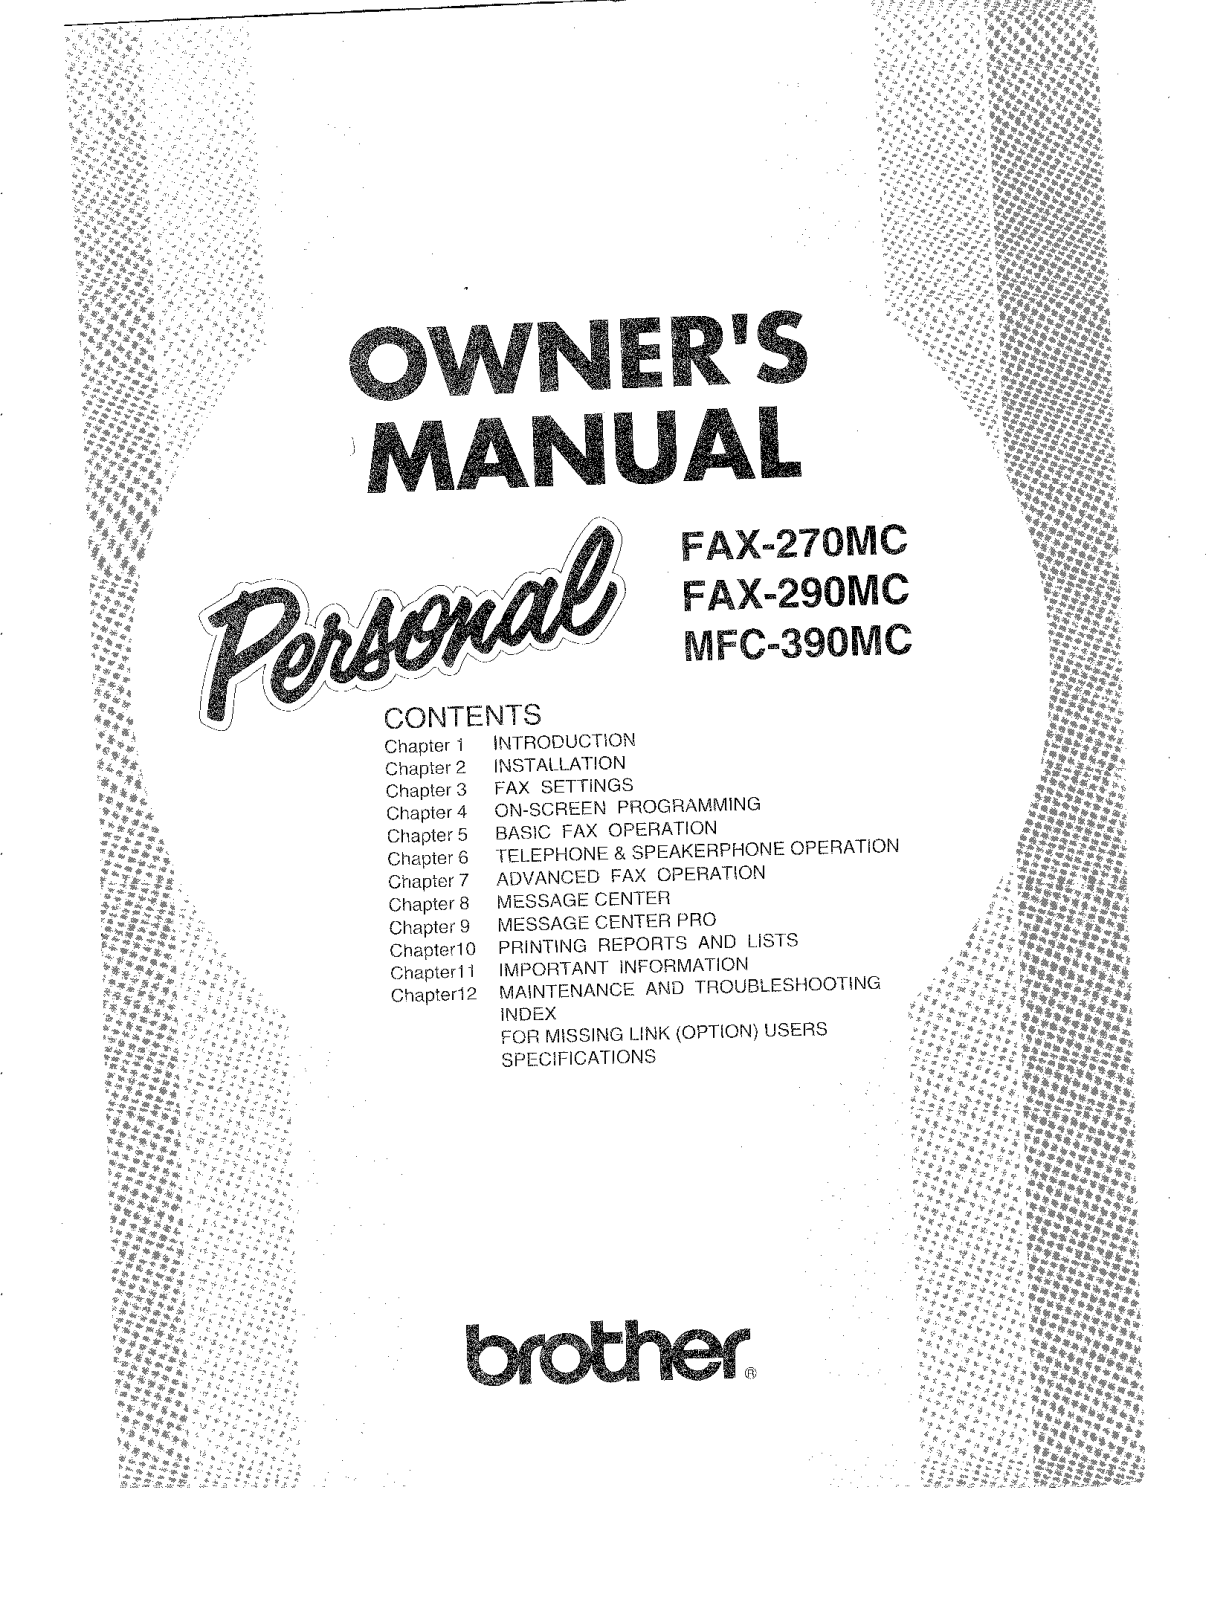 Brother FAX-270MC, FAX-290MC, MFC-390MC Owner Manual